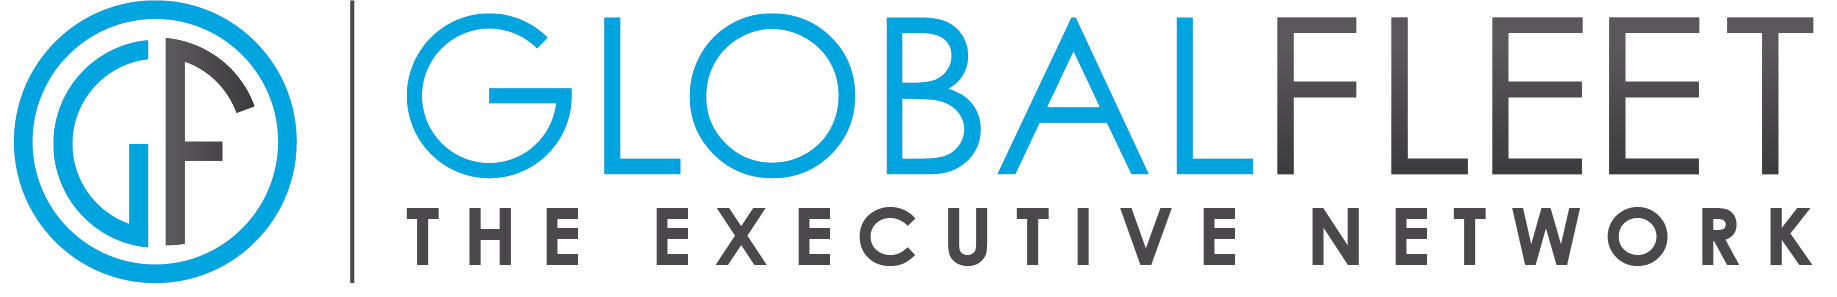 Global Fleet Logo